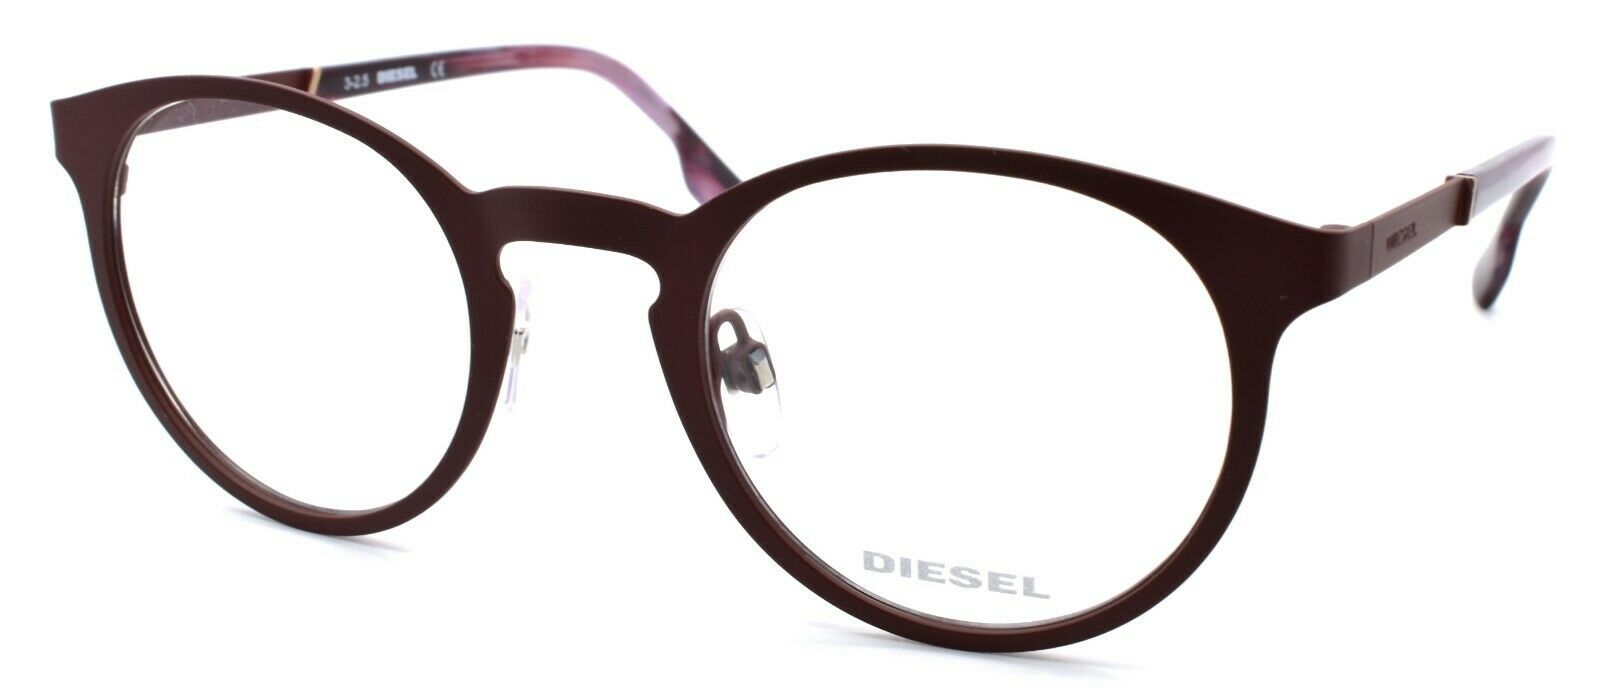 1-Diesel DL5200 079 Eyeglasses Frames Round 48-23-145 Matte Burgundy-664689765430-IKSpecs